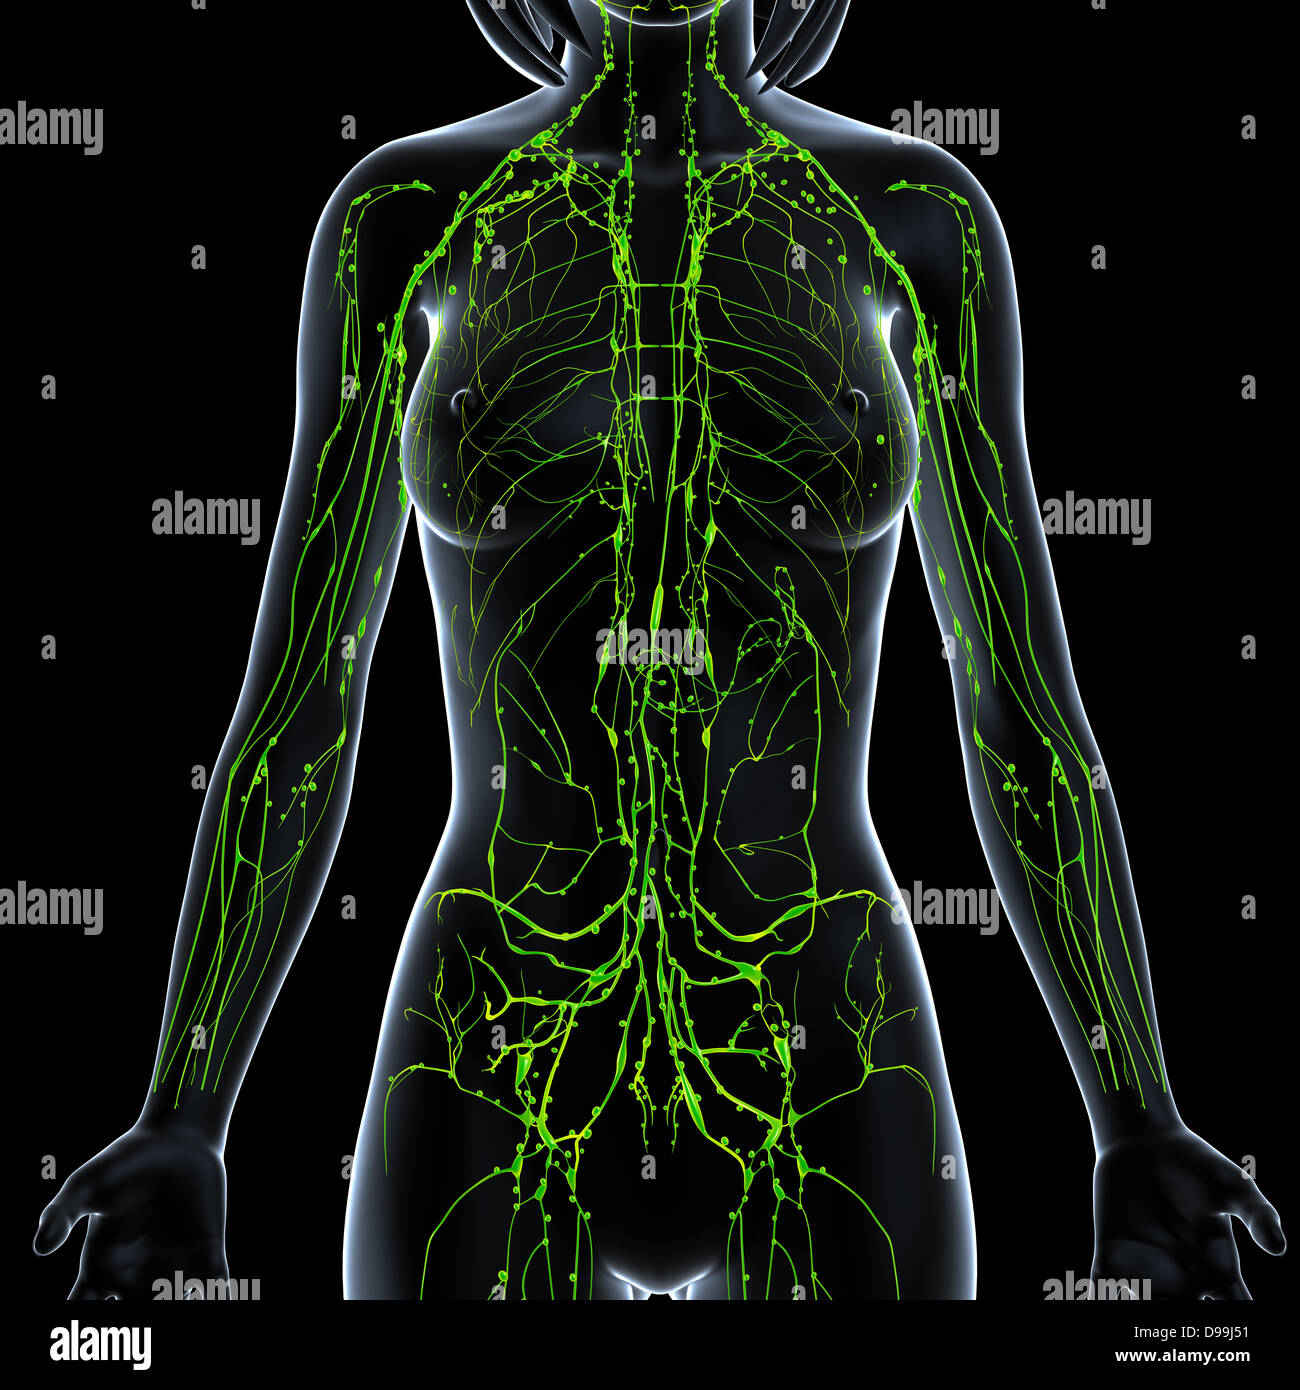 lymphatic system of female body anatomy in x-ray form Stock Photo - Alamy